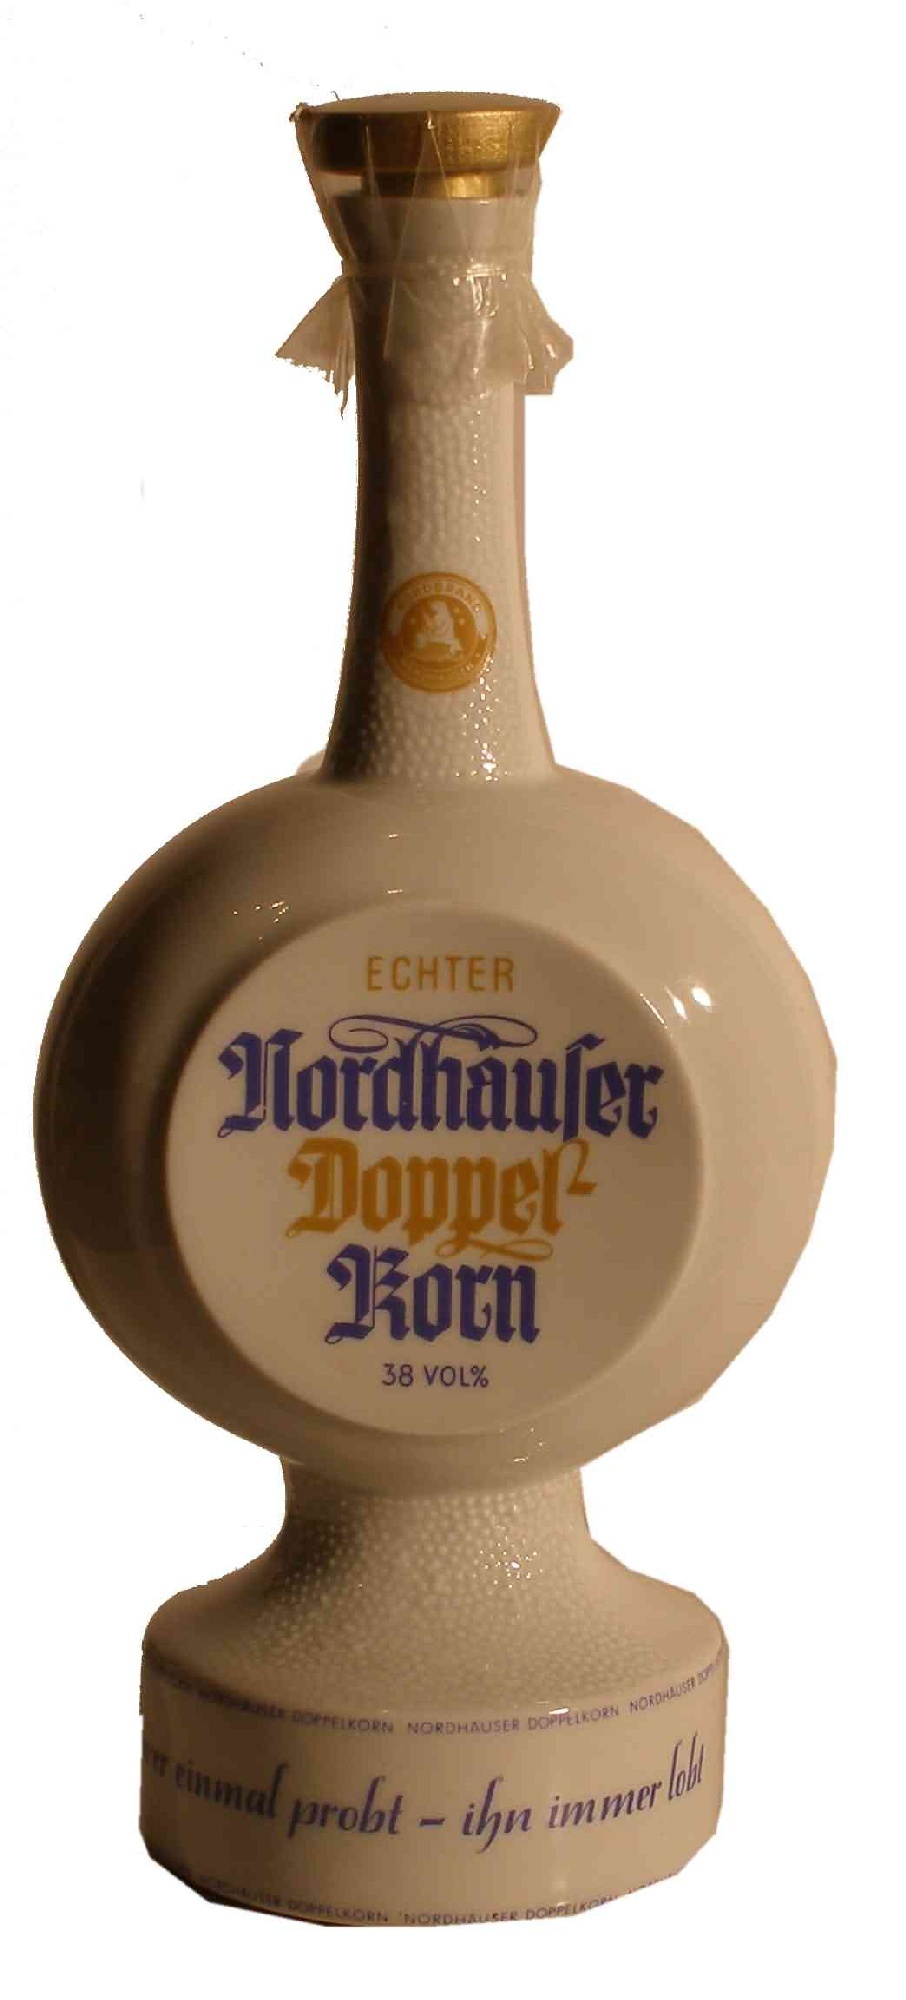 Spieluhrflasche aus Keramik -Echter Nordhäuser Doppelkorn- (Echter Nordhäuser Traditionsbrennerei CC BY-NC-SA)